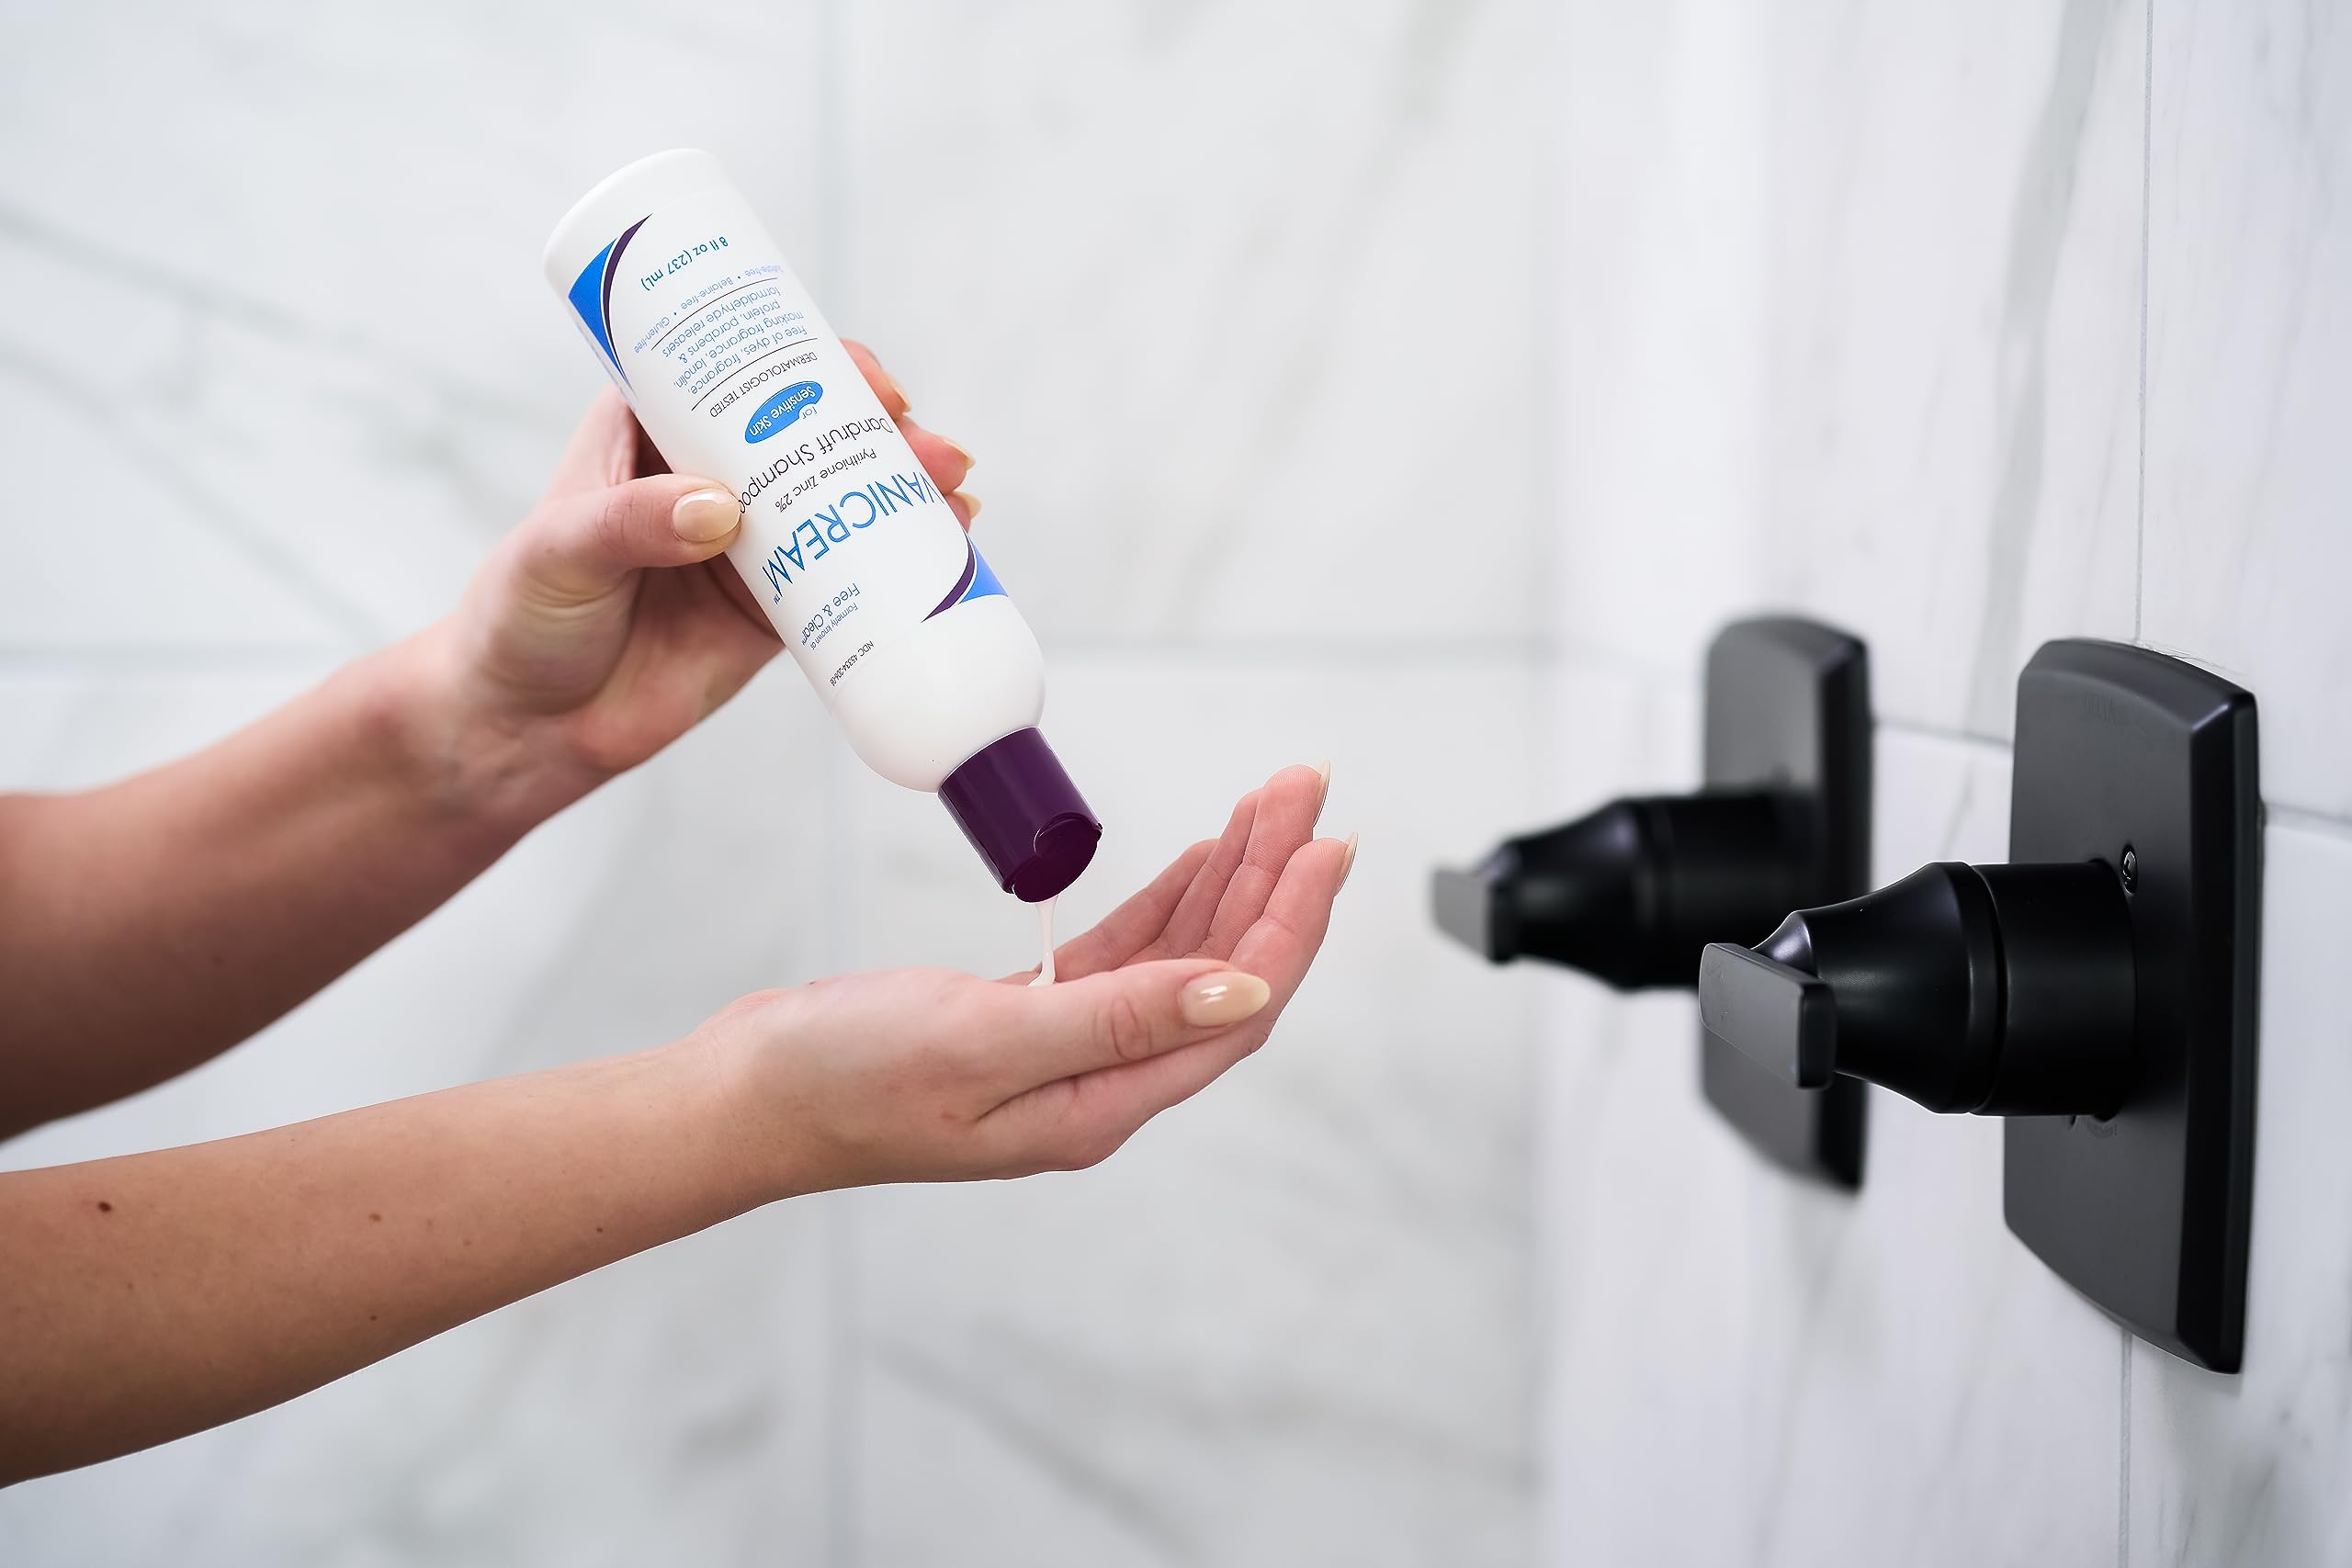 Vanicream Dandruff Shampoo – pH Balanced Mild Formula Effective For All Hair Types and Sensitive Scalps - Free of Fragrance, Lanolin, and Parabens – 8 Fl Oz